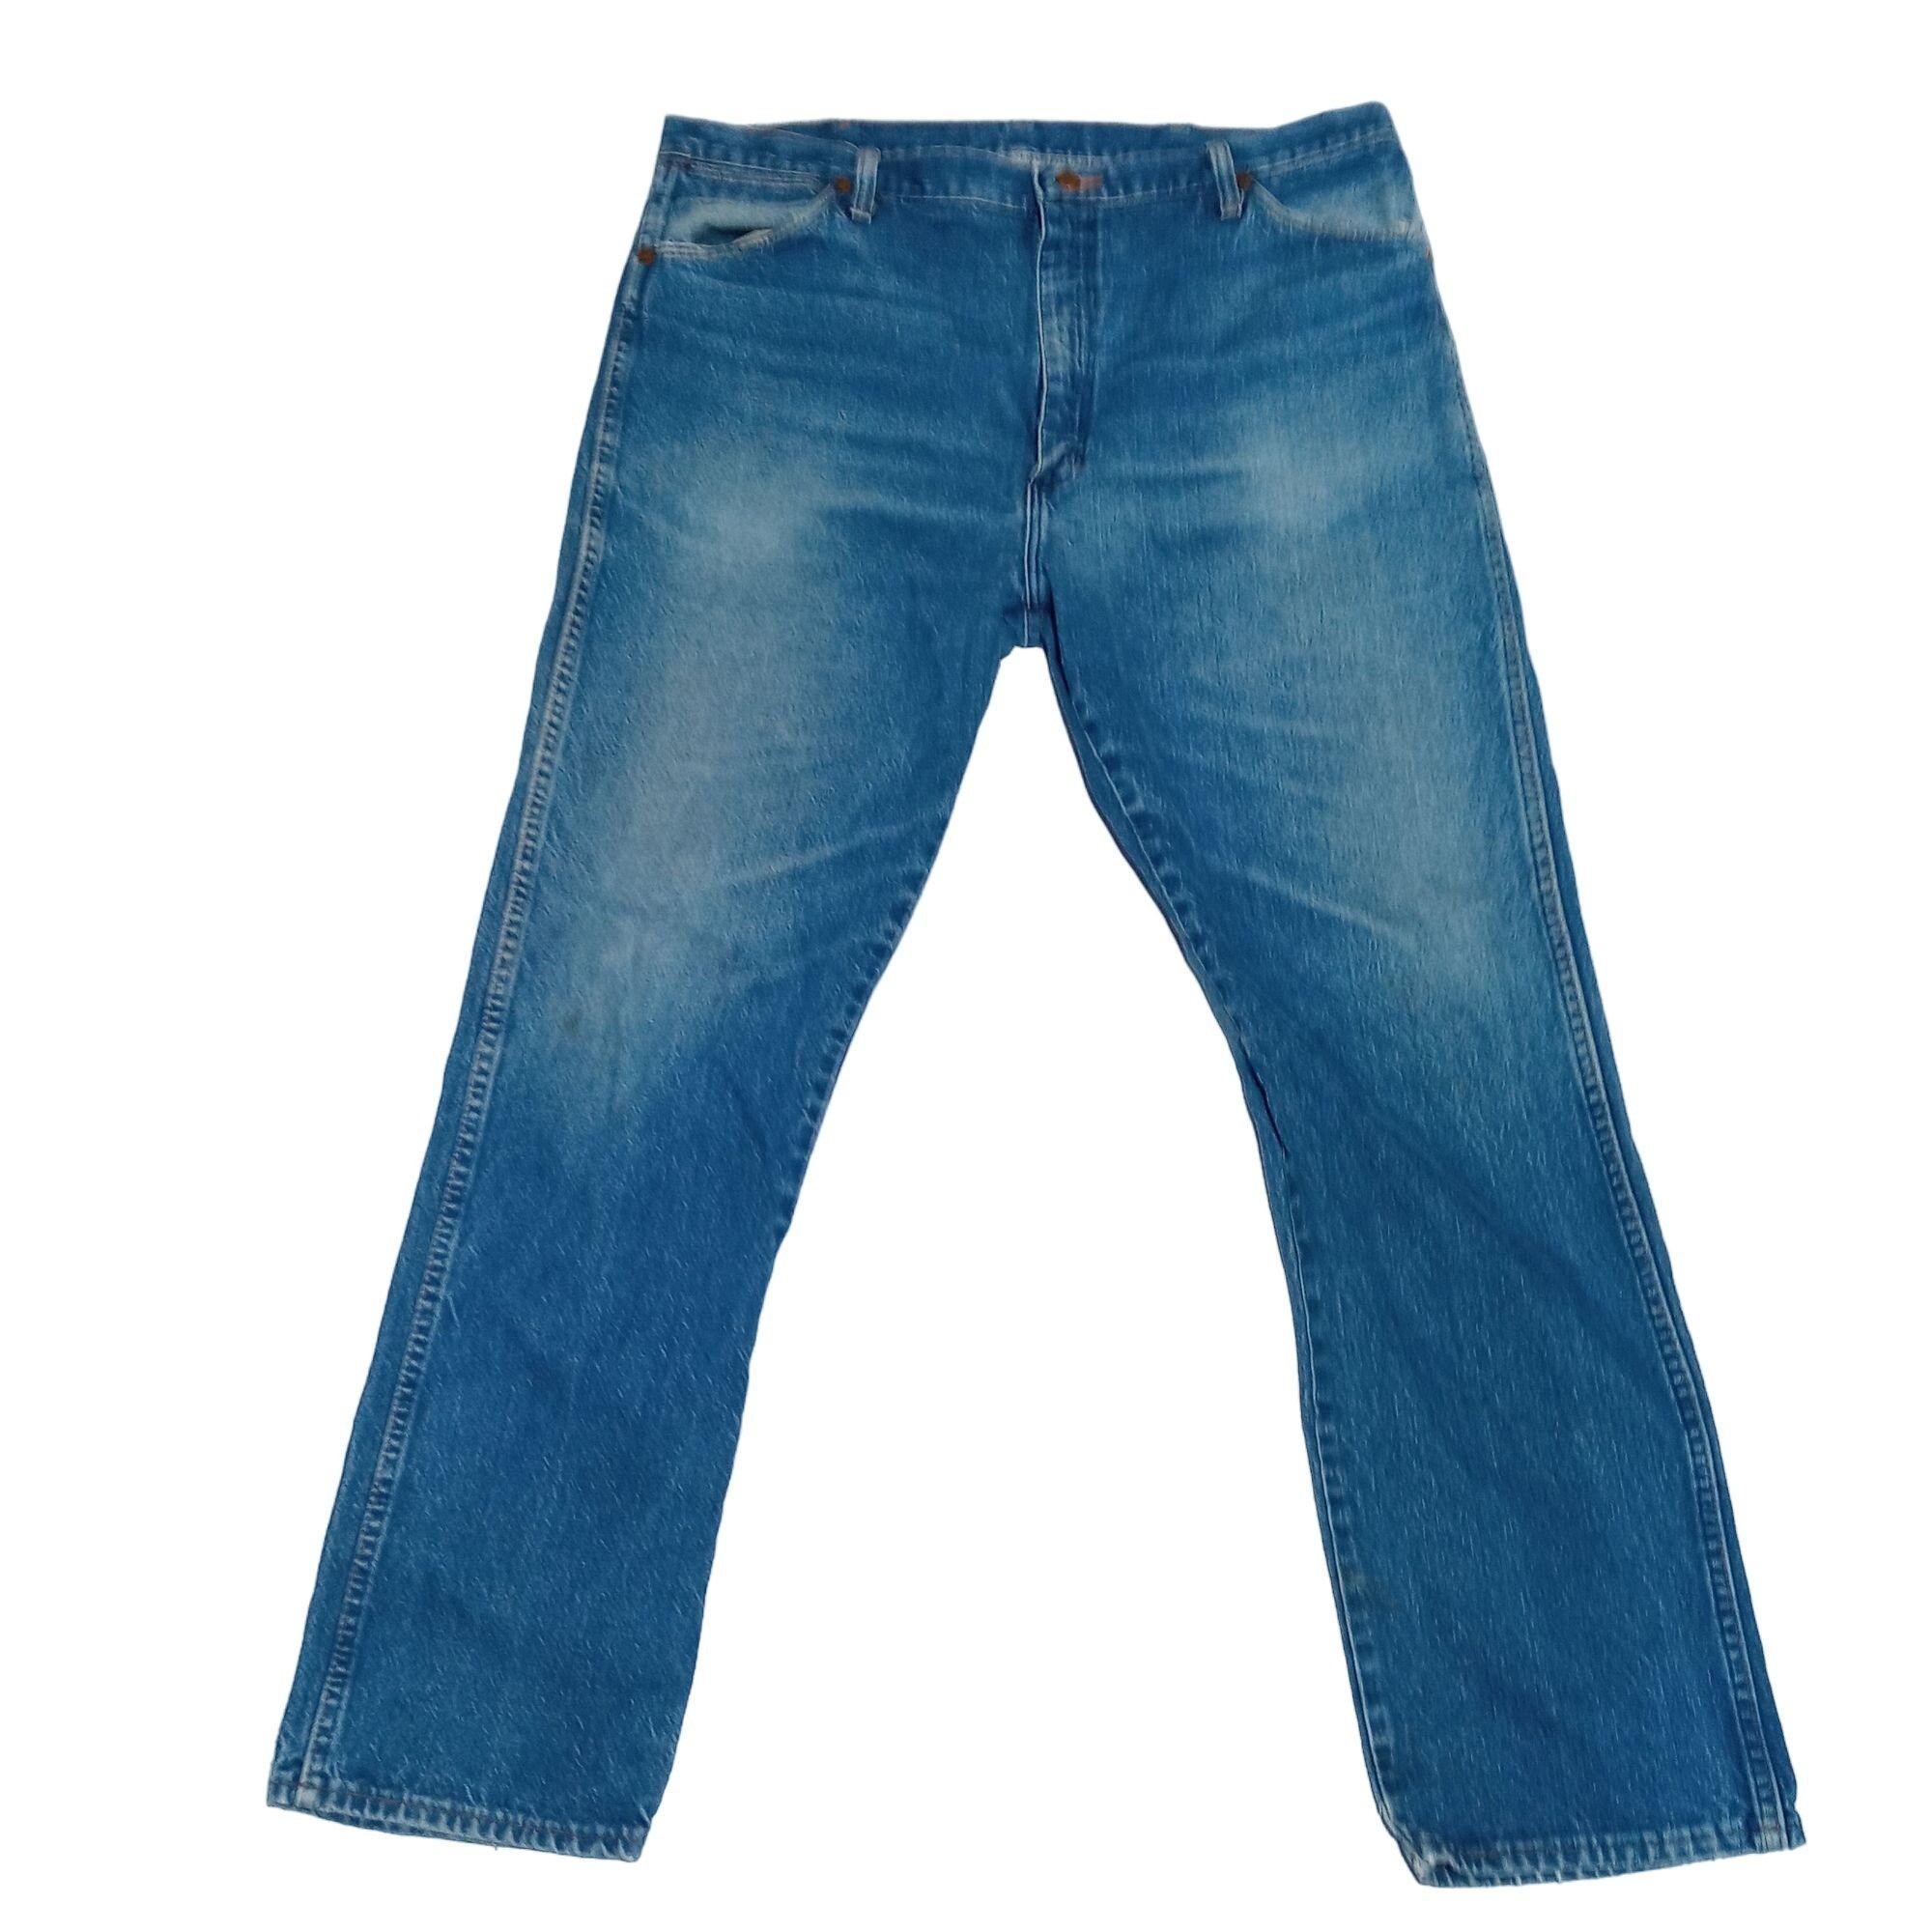 Wrangler Vintage Wrangler Mens Blue Jeans 37 x 28 Faded Worn Denim Co Size US 37 - 2 Preview